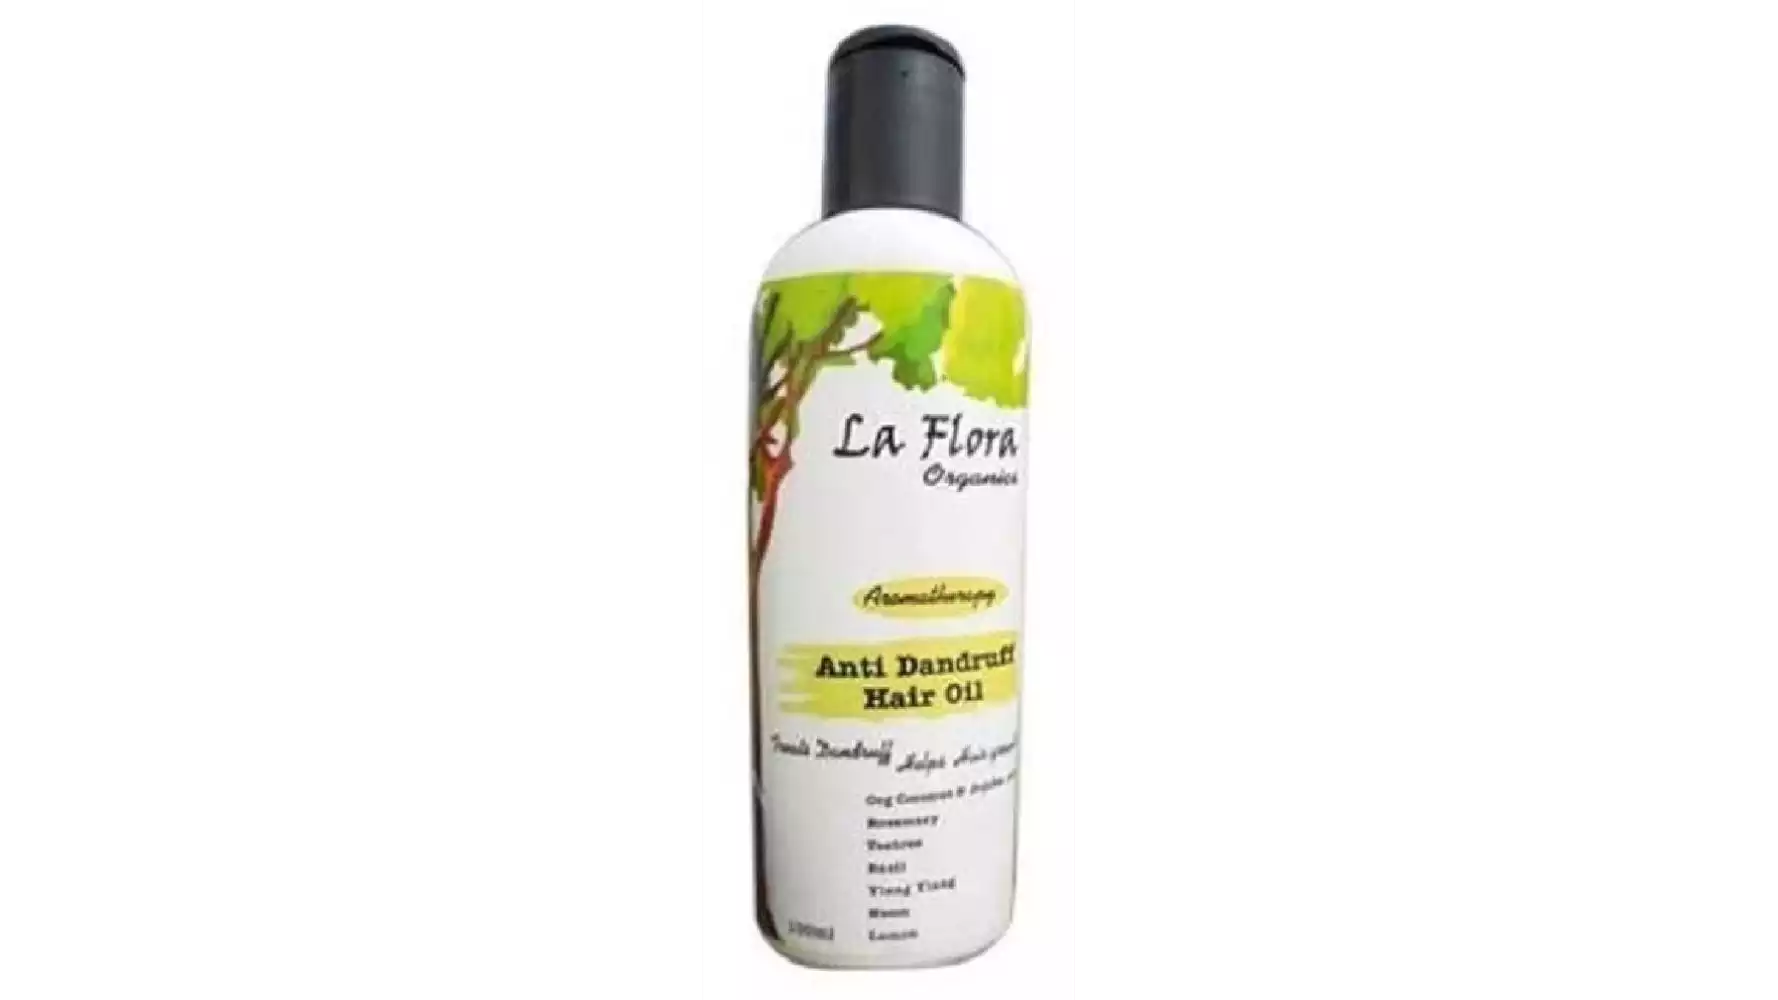 La Flora Organics Aromatherapy Anti Dandruff Hair Oil (100ml)